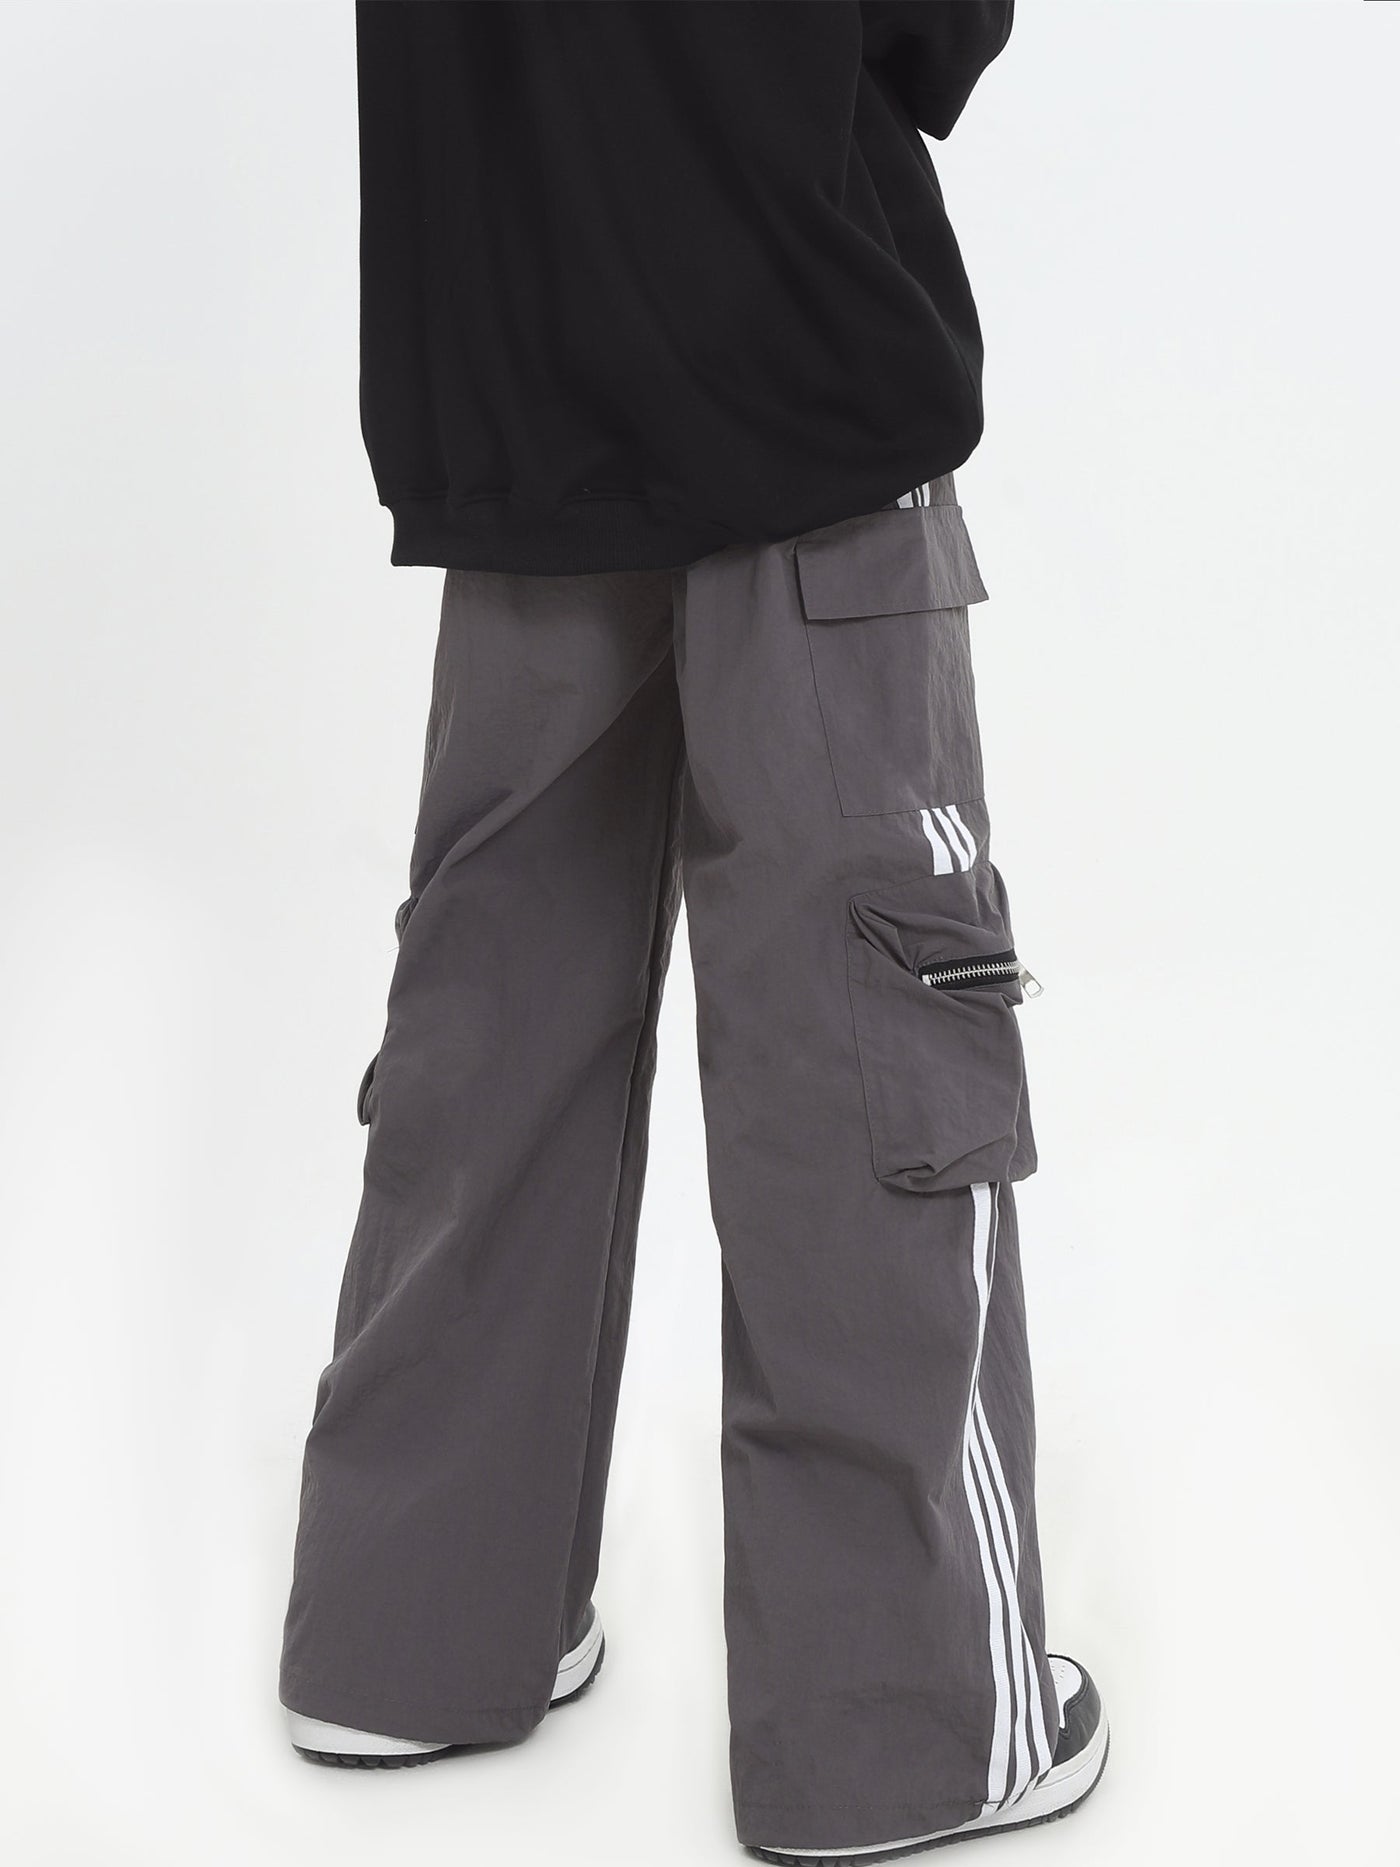 INS Korea Side Stripes Drawstring Cargo Pants Korean Street Fashion Pants By INS Korea Shop Online at OH Vault